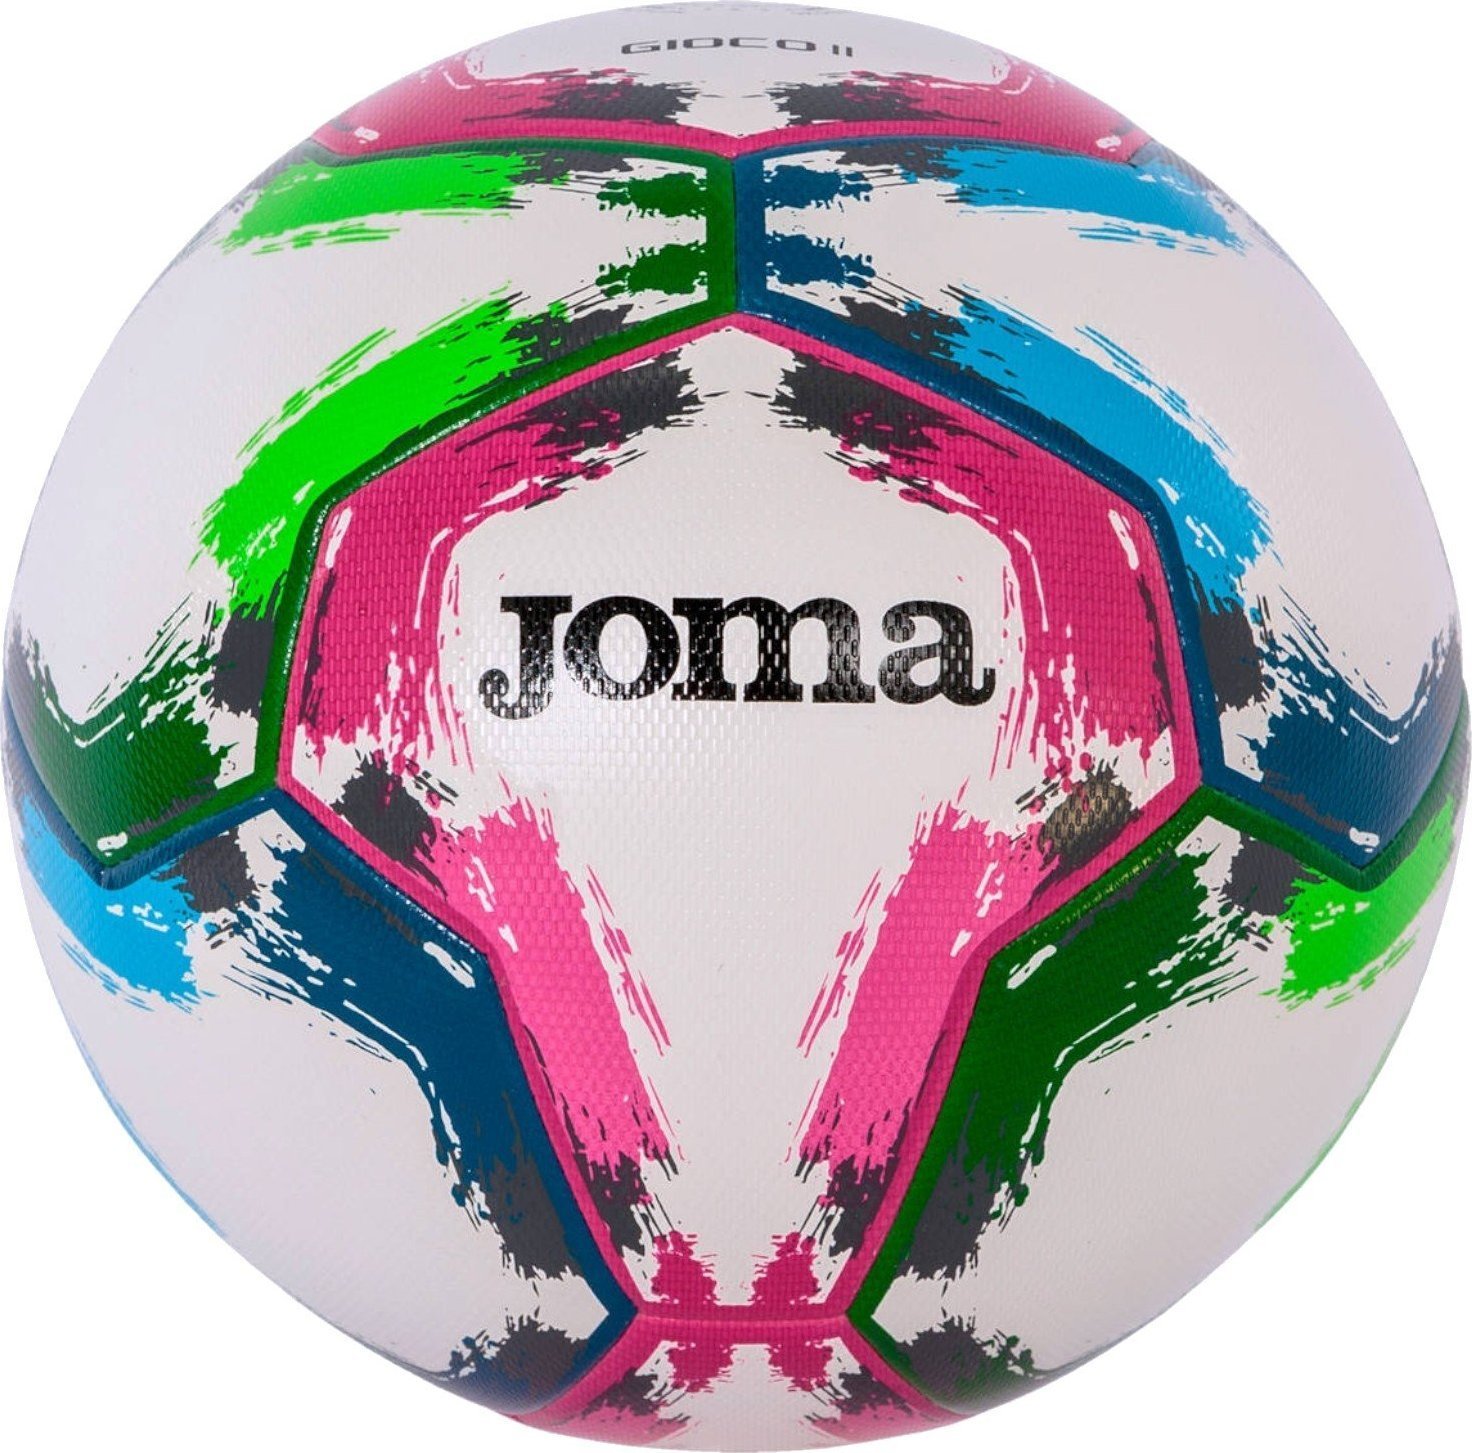 Joma Joma Gioco II FIFA Quality Pro Ball 400646200 białe 5